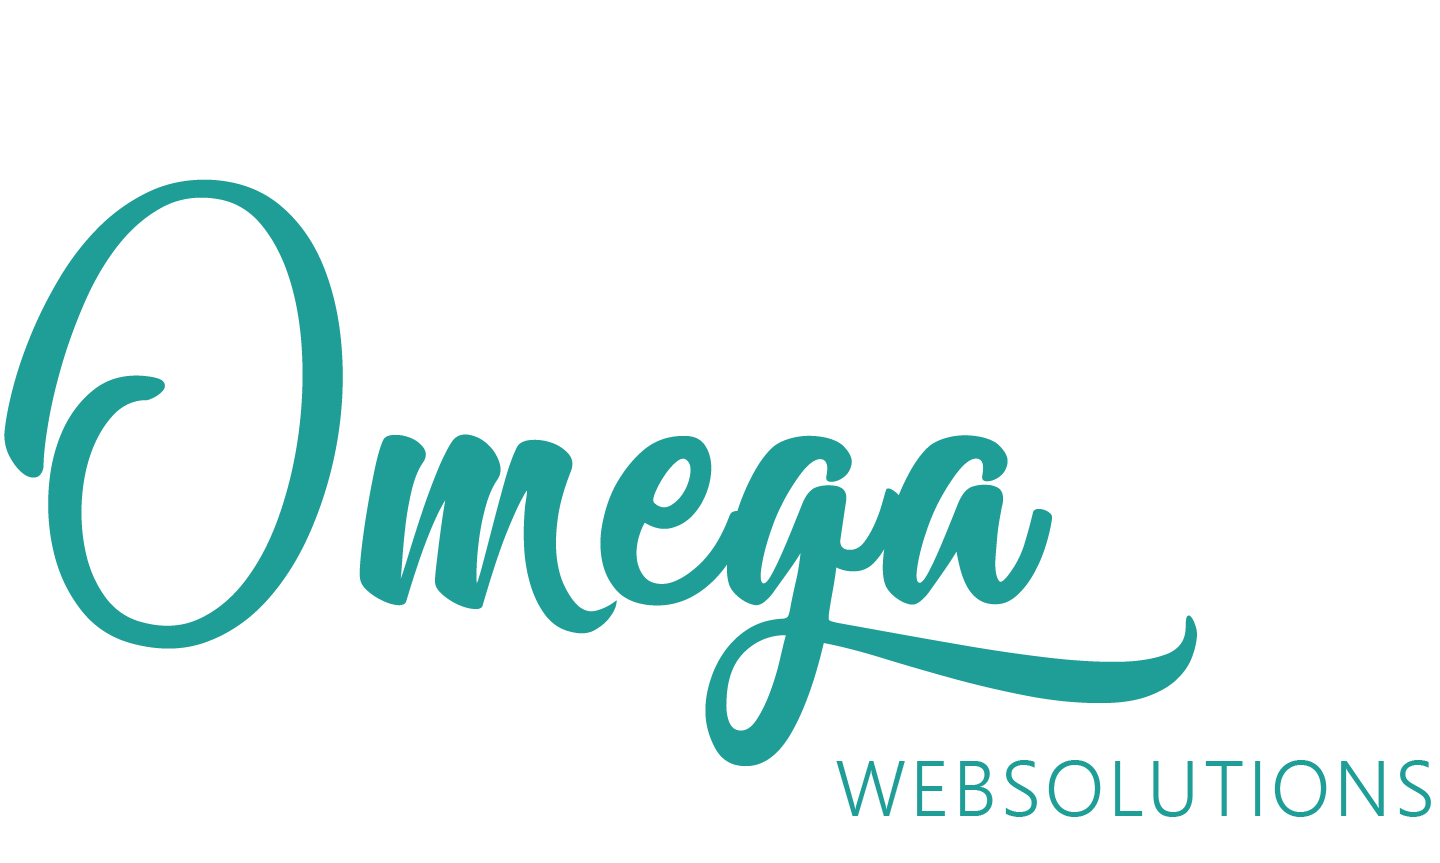 Omega Websolutions